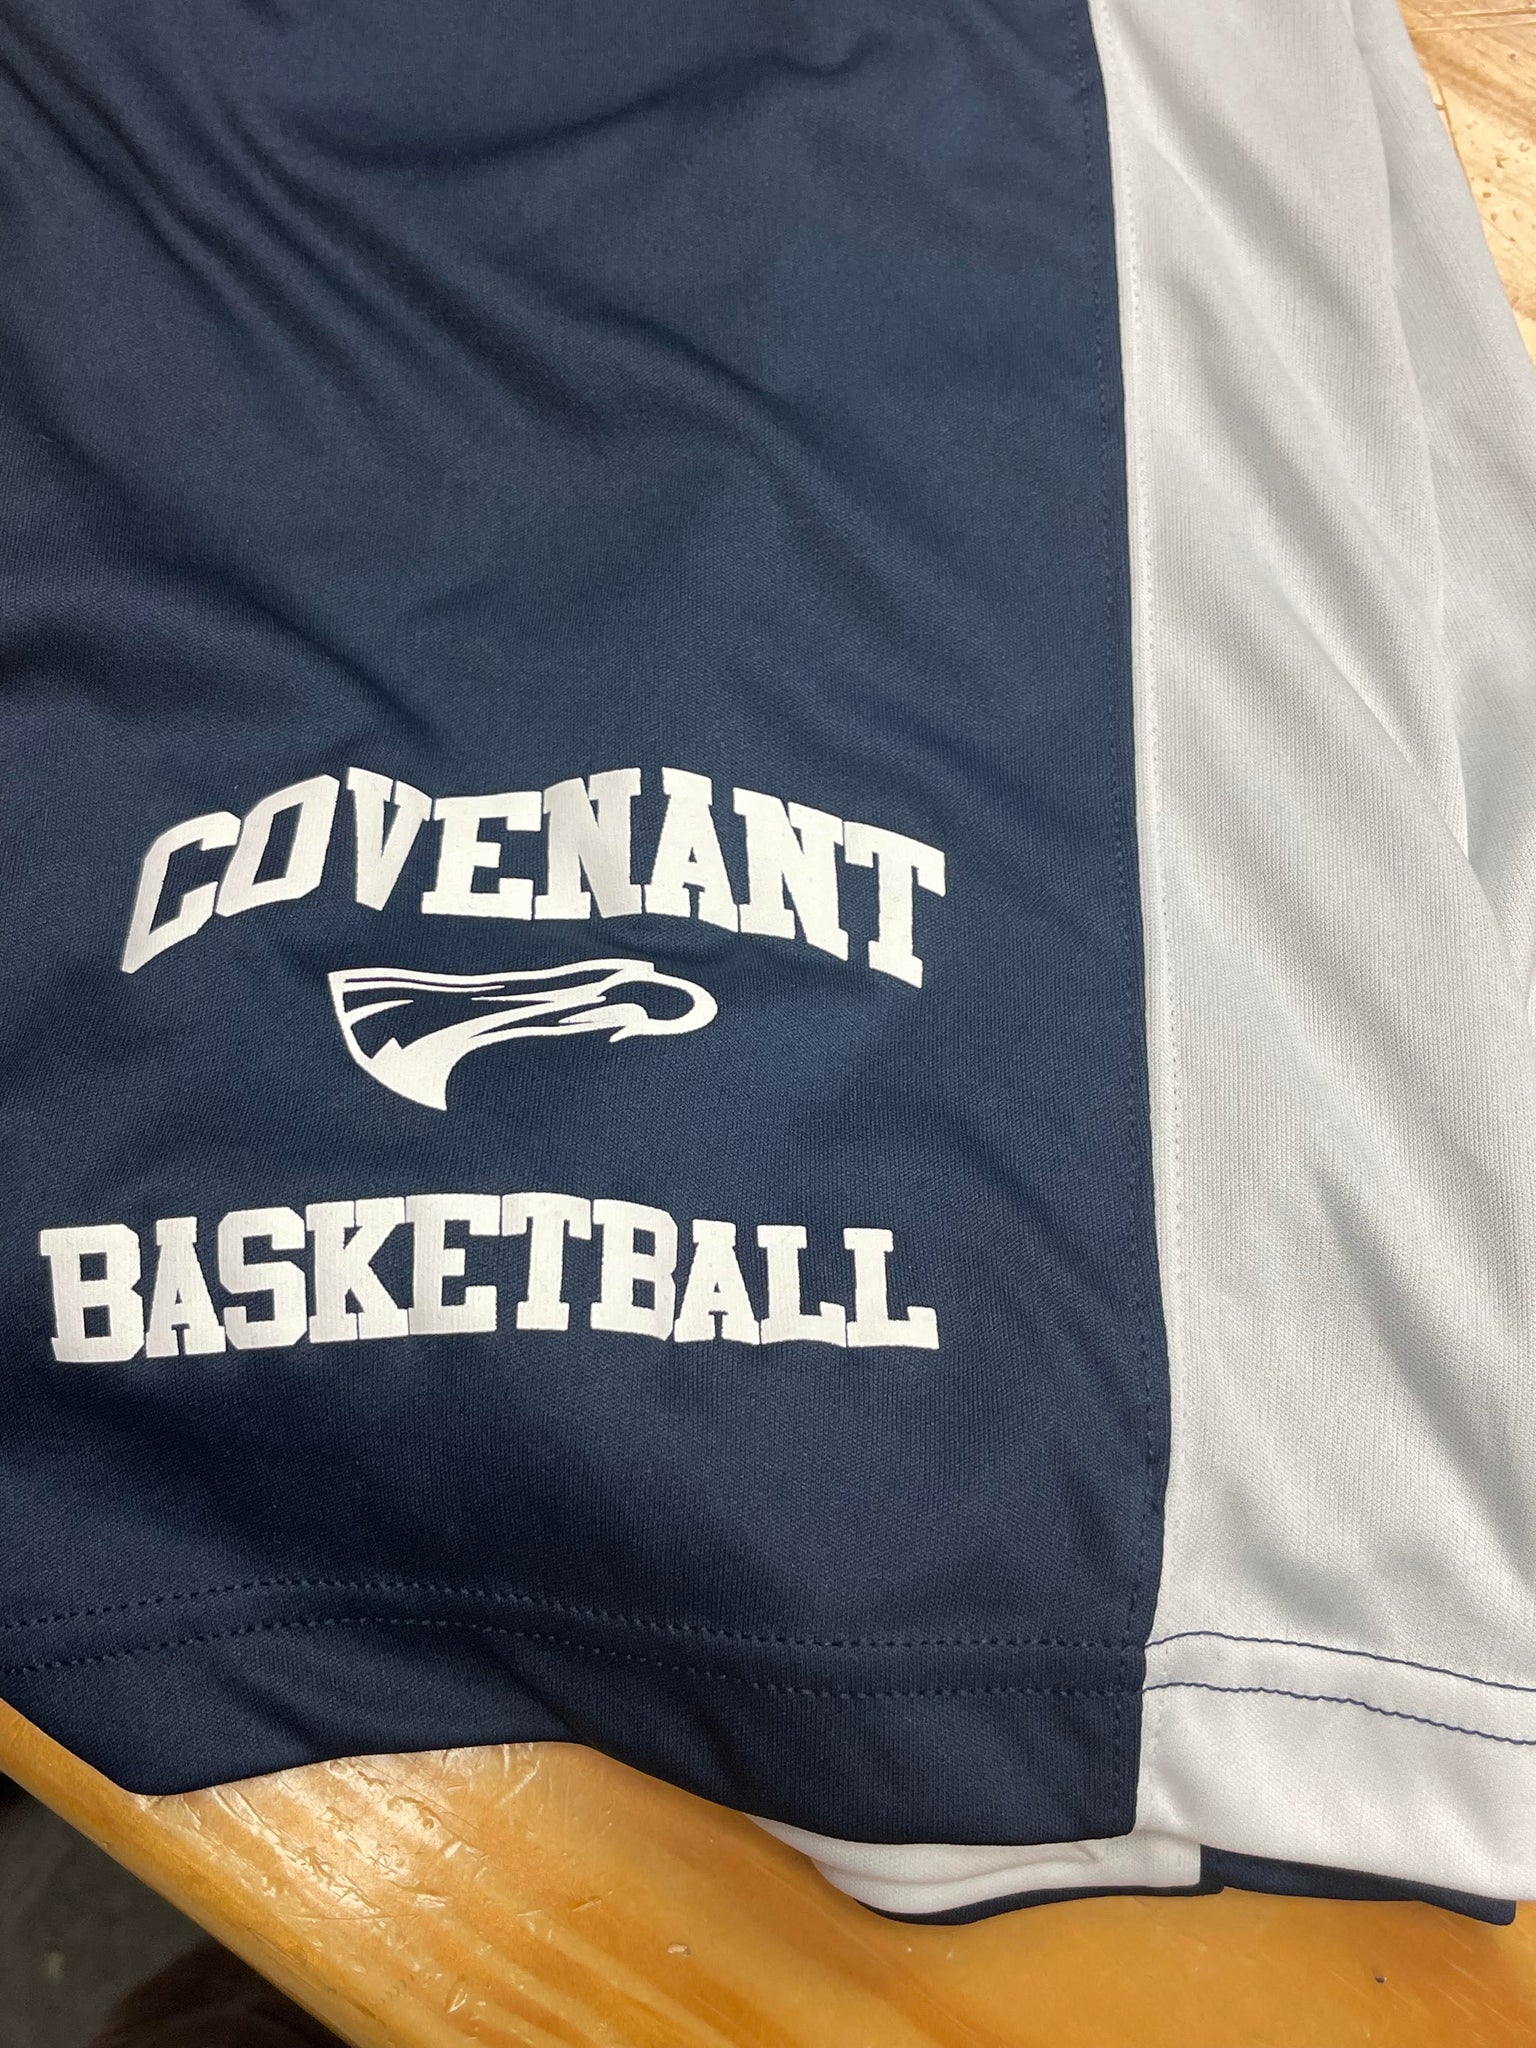 Covenant Basketball Shorts - Reversible